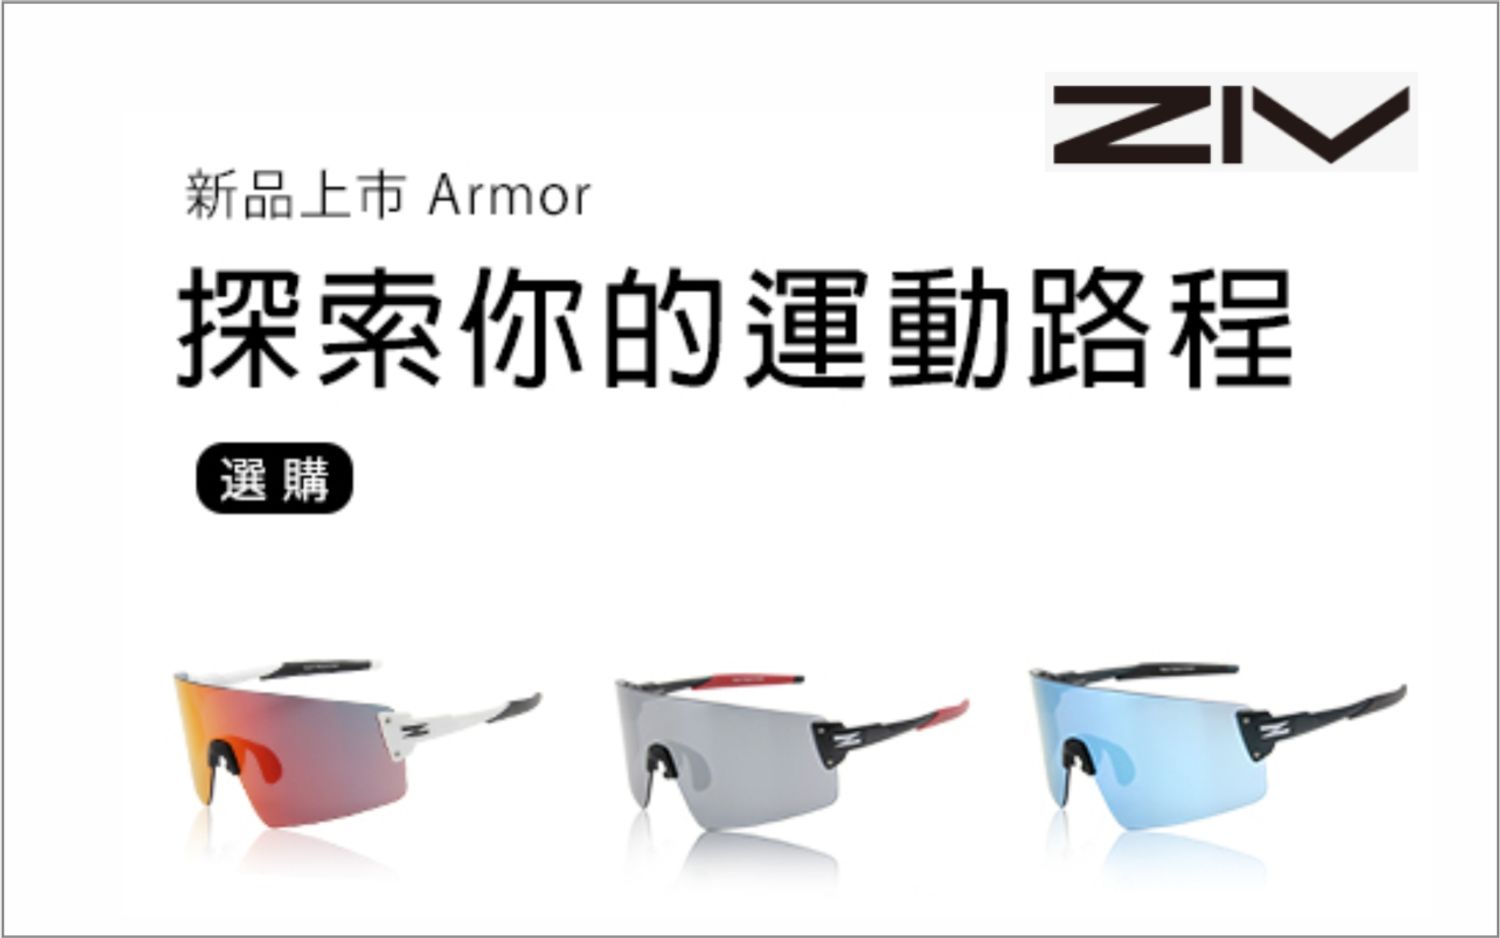 ZIV 國家隊指定運動眼鏡品牌